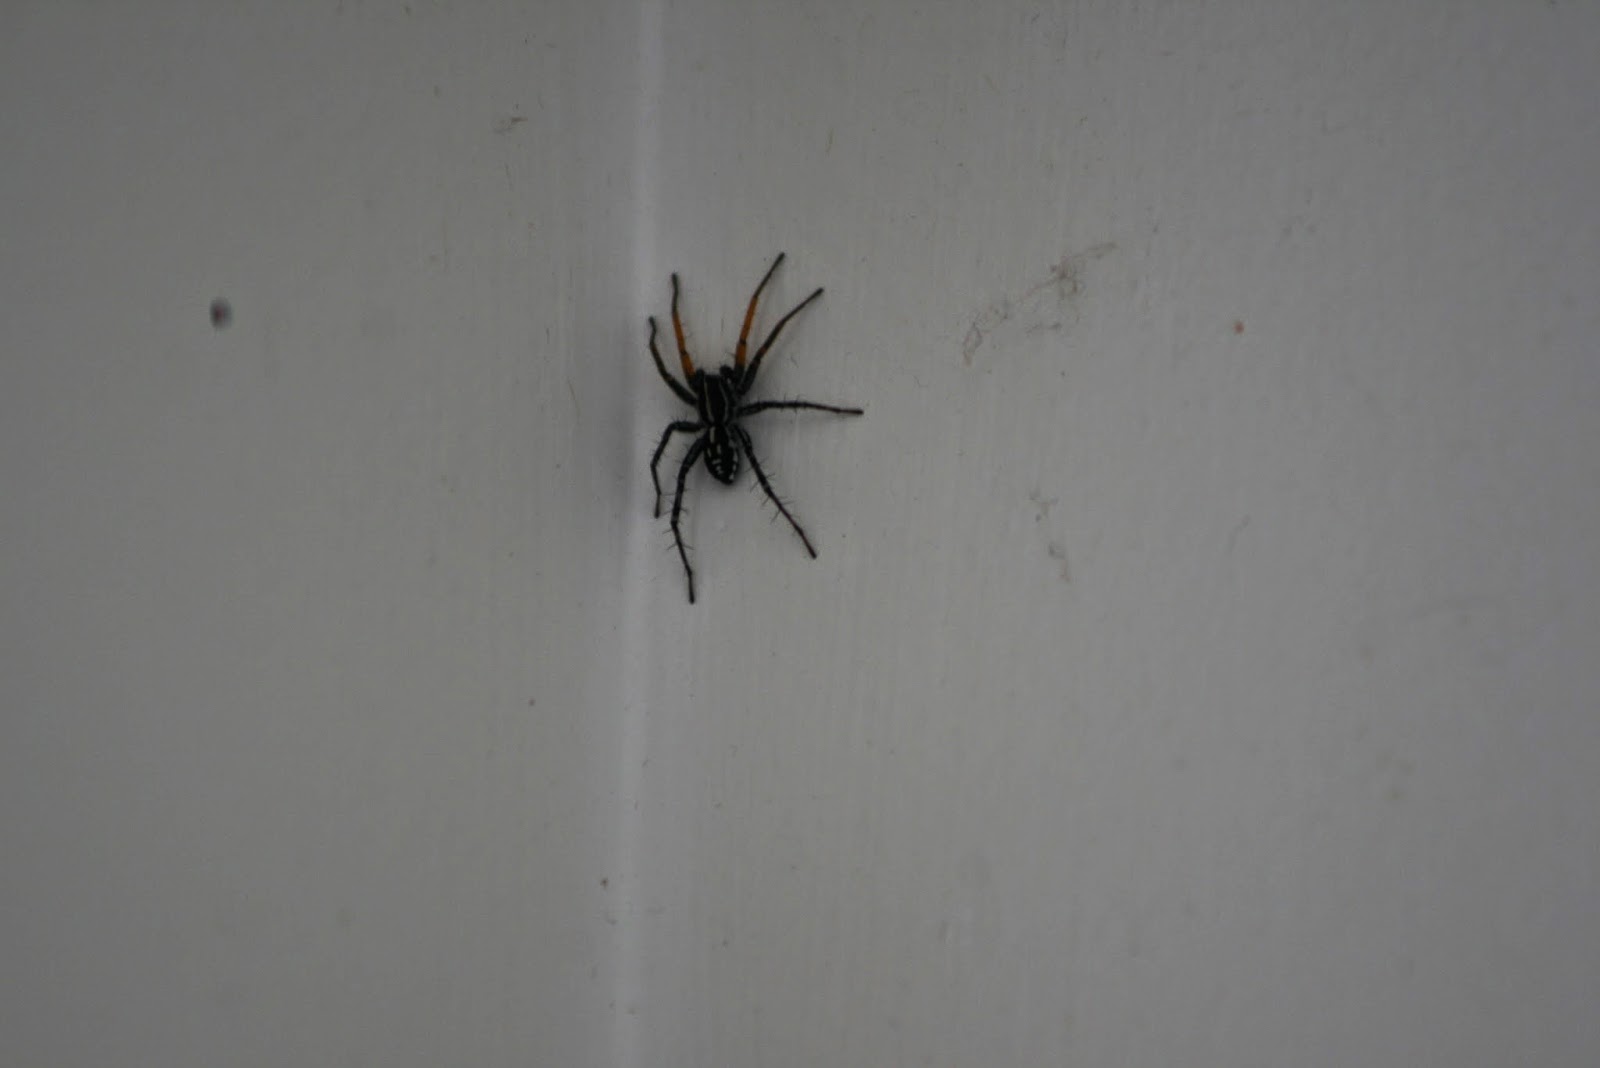 Black Widow Spider Spells Danger - Bug Squad - ANR Blogs